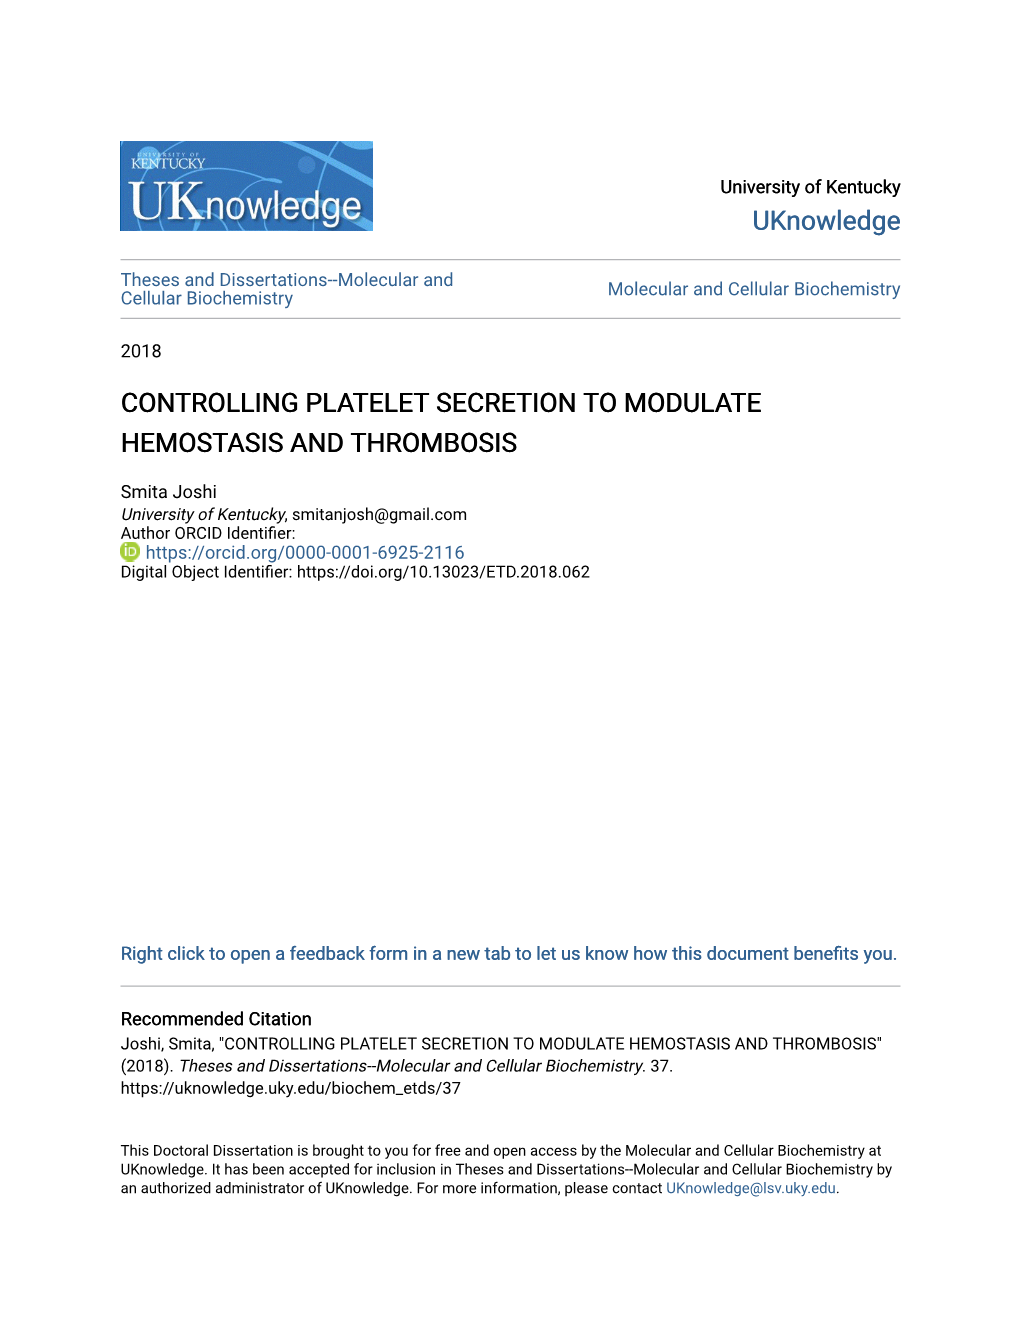 Controlling Platelet Secretion to Modulate Hemostasis and Thrombosis